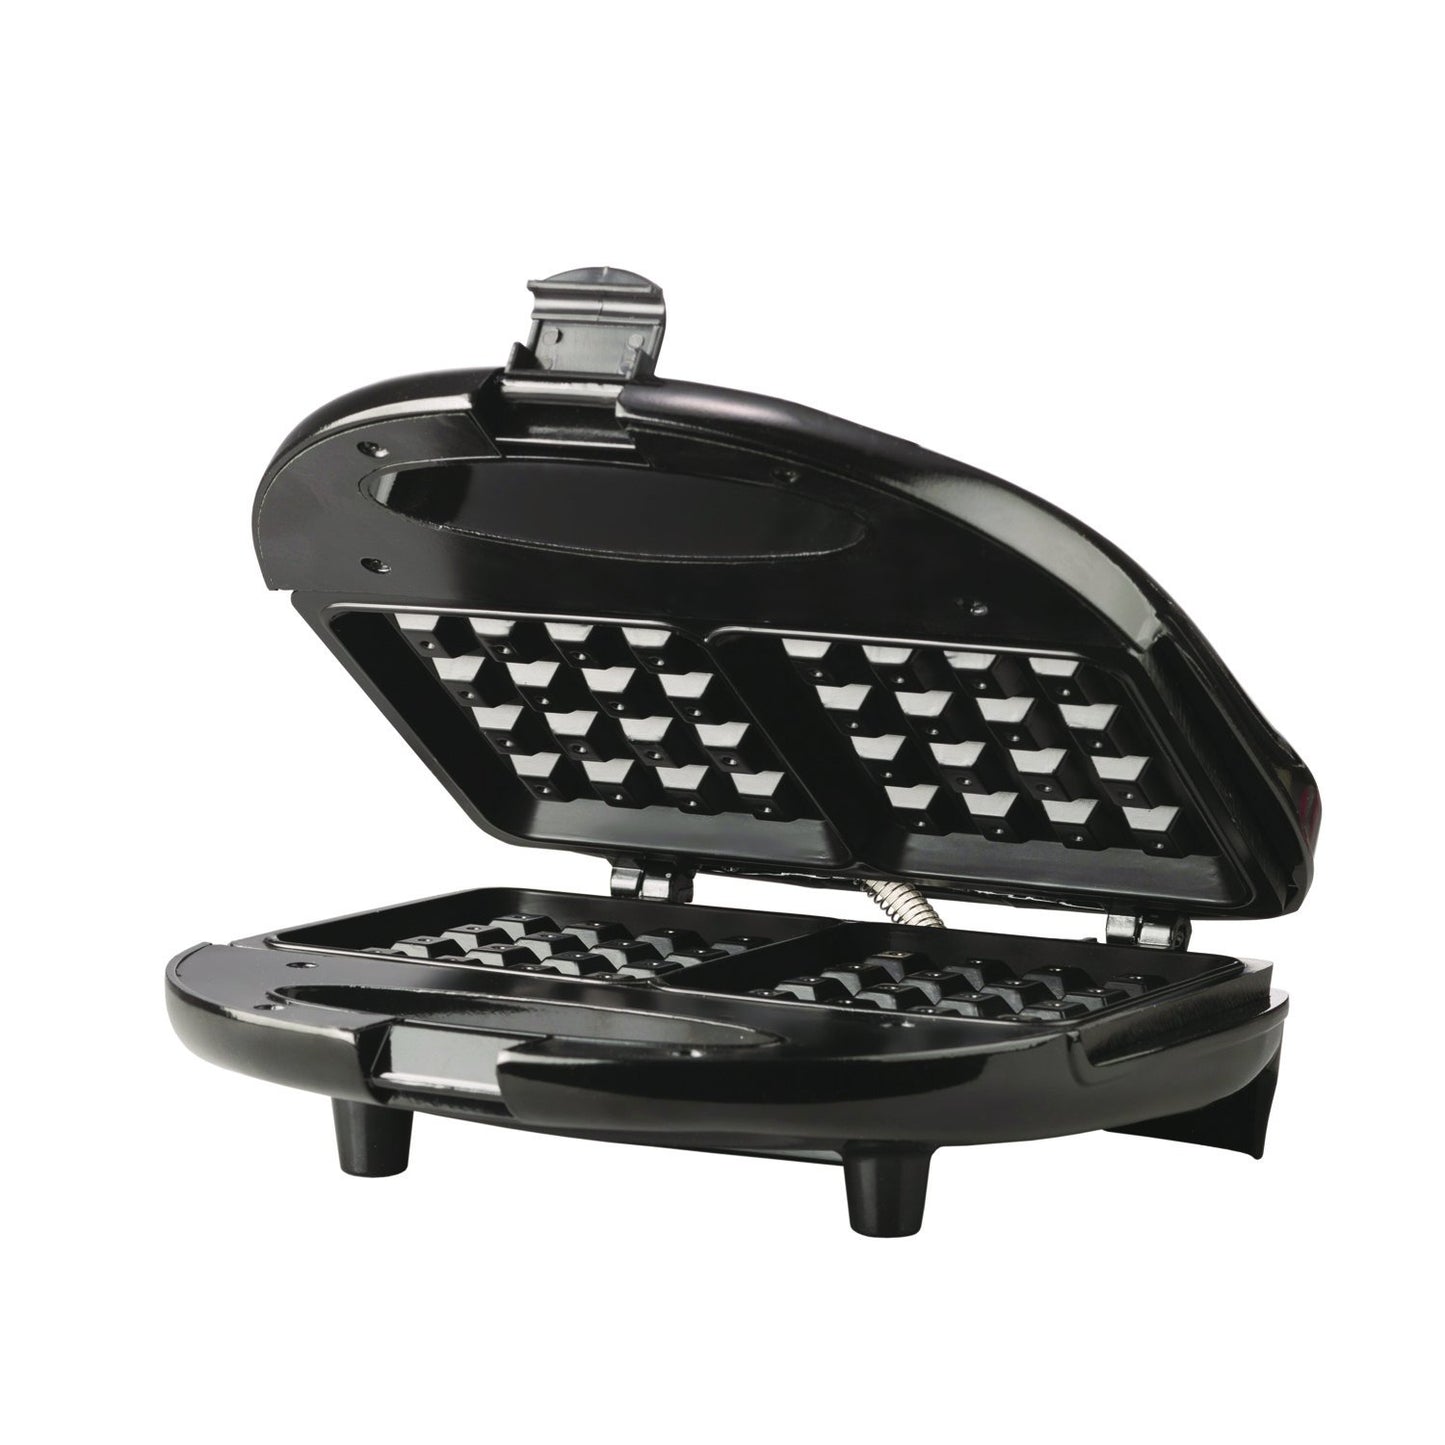 Brentwood Appl. TS-243 Nonstick Dual Waffle Maker (Black)